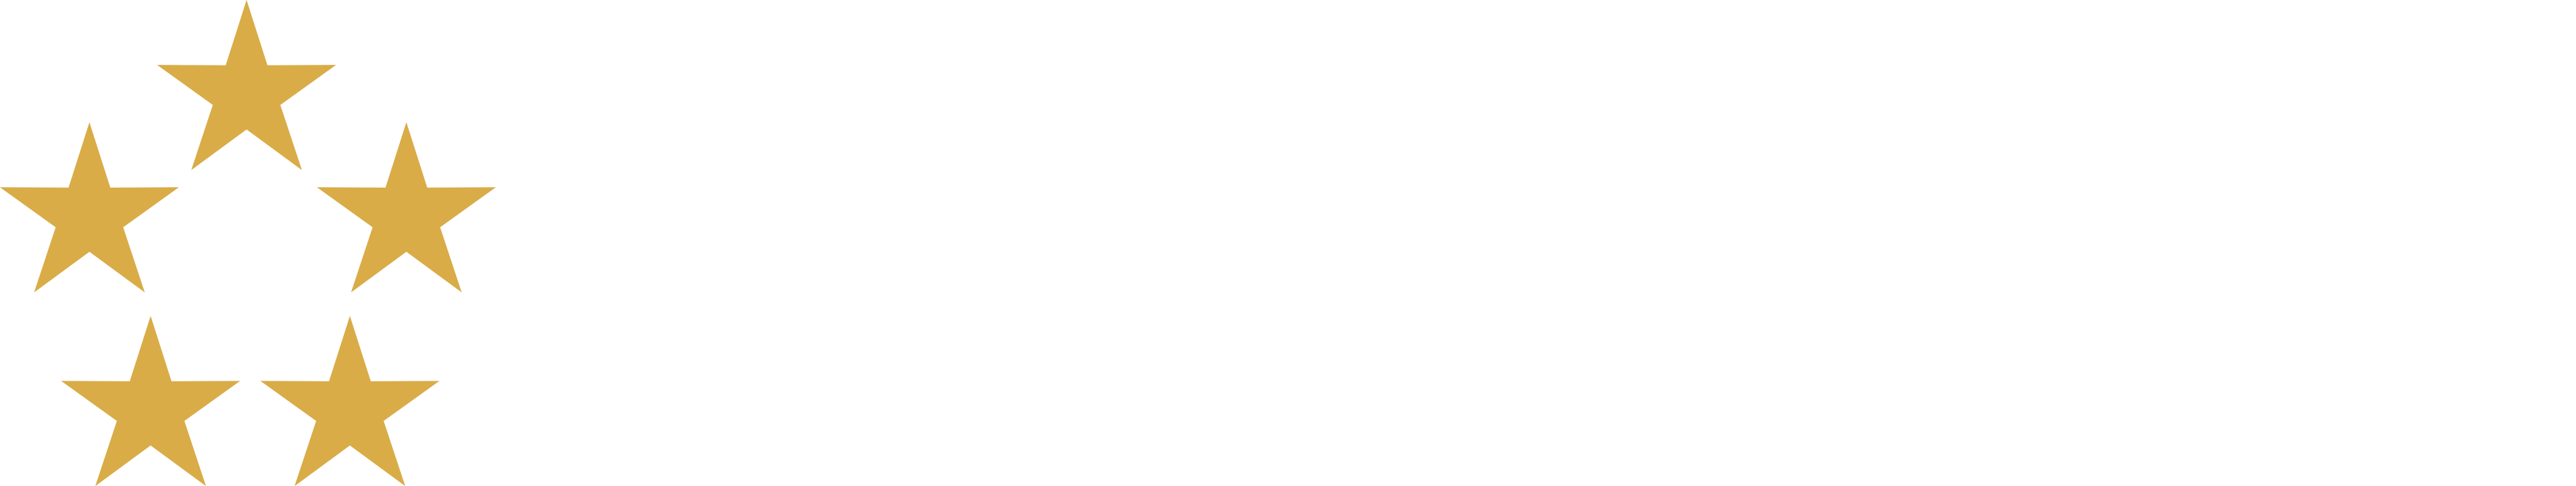 Five Star Bancorp company logo